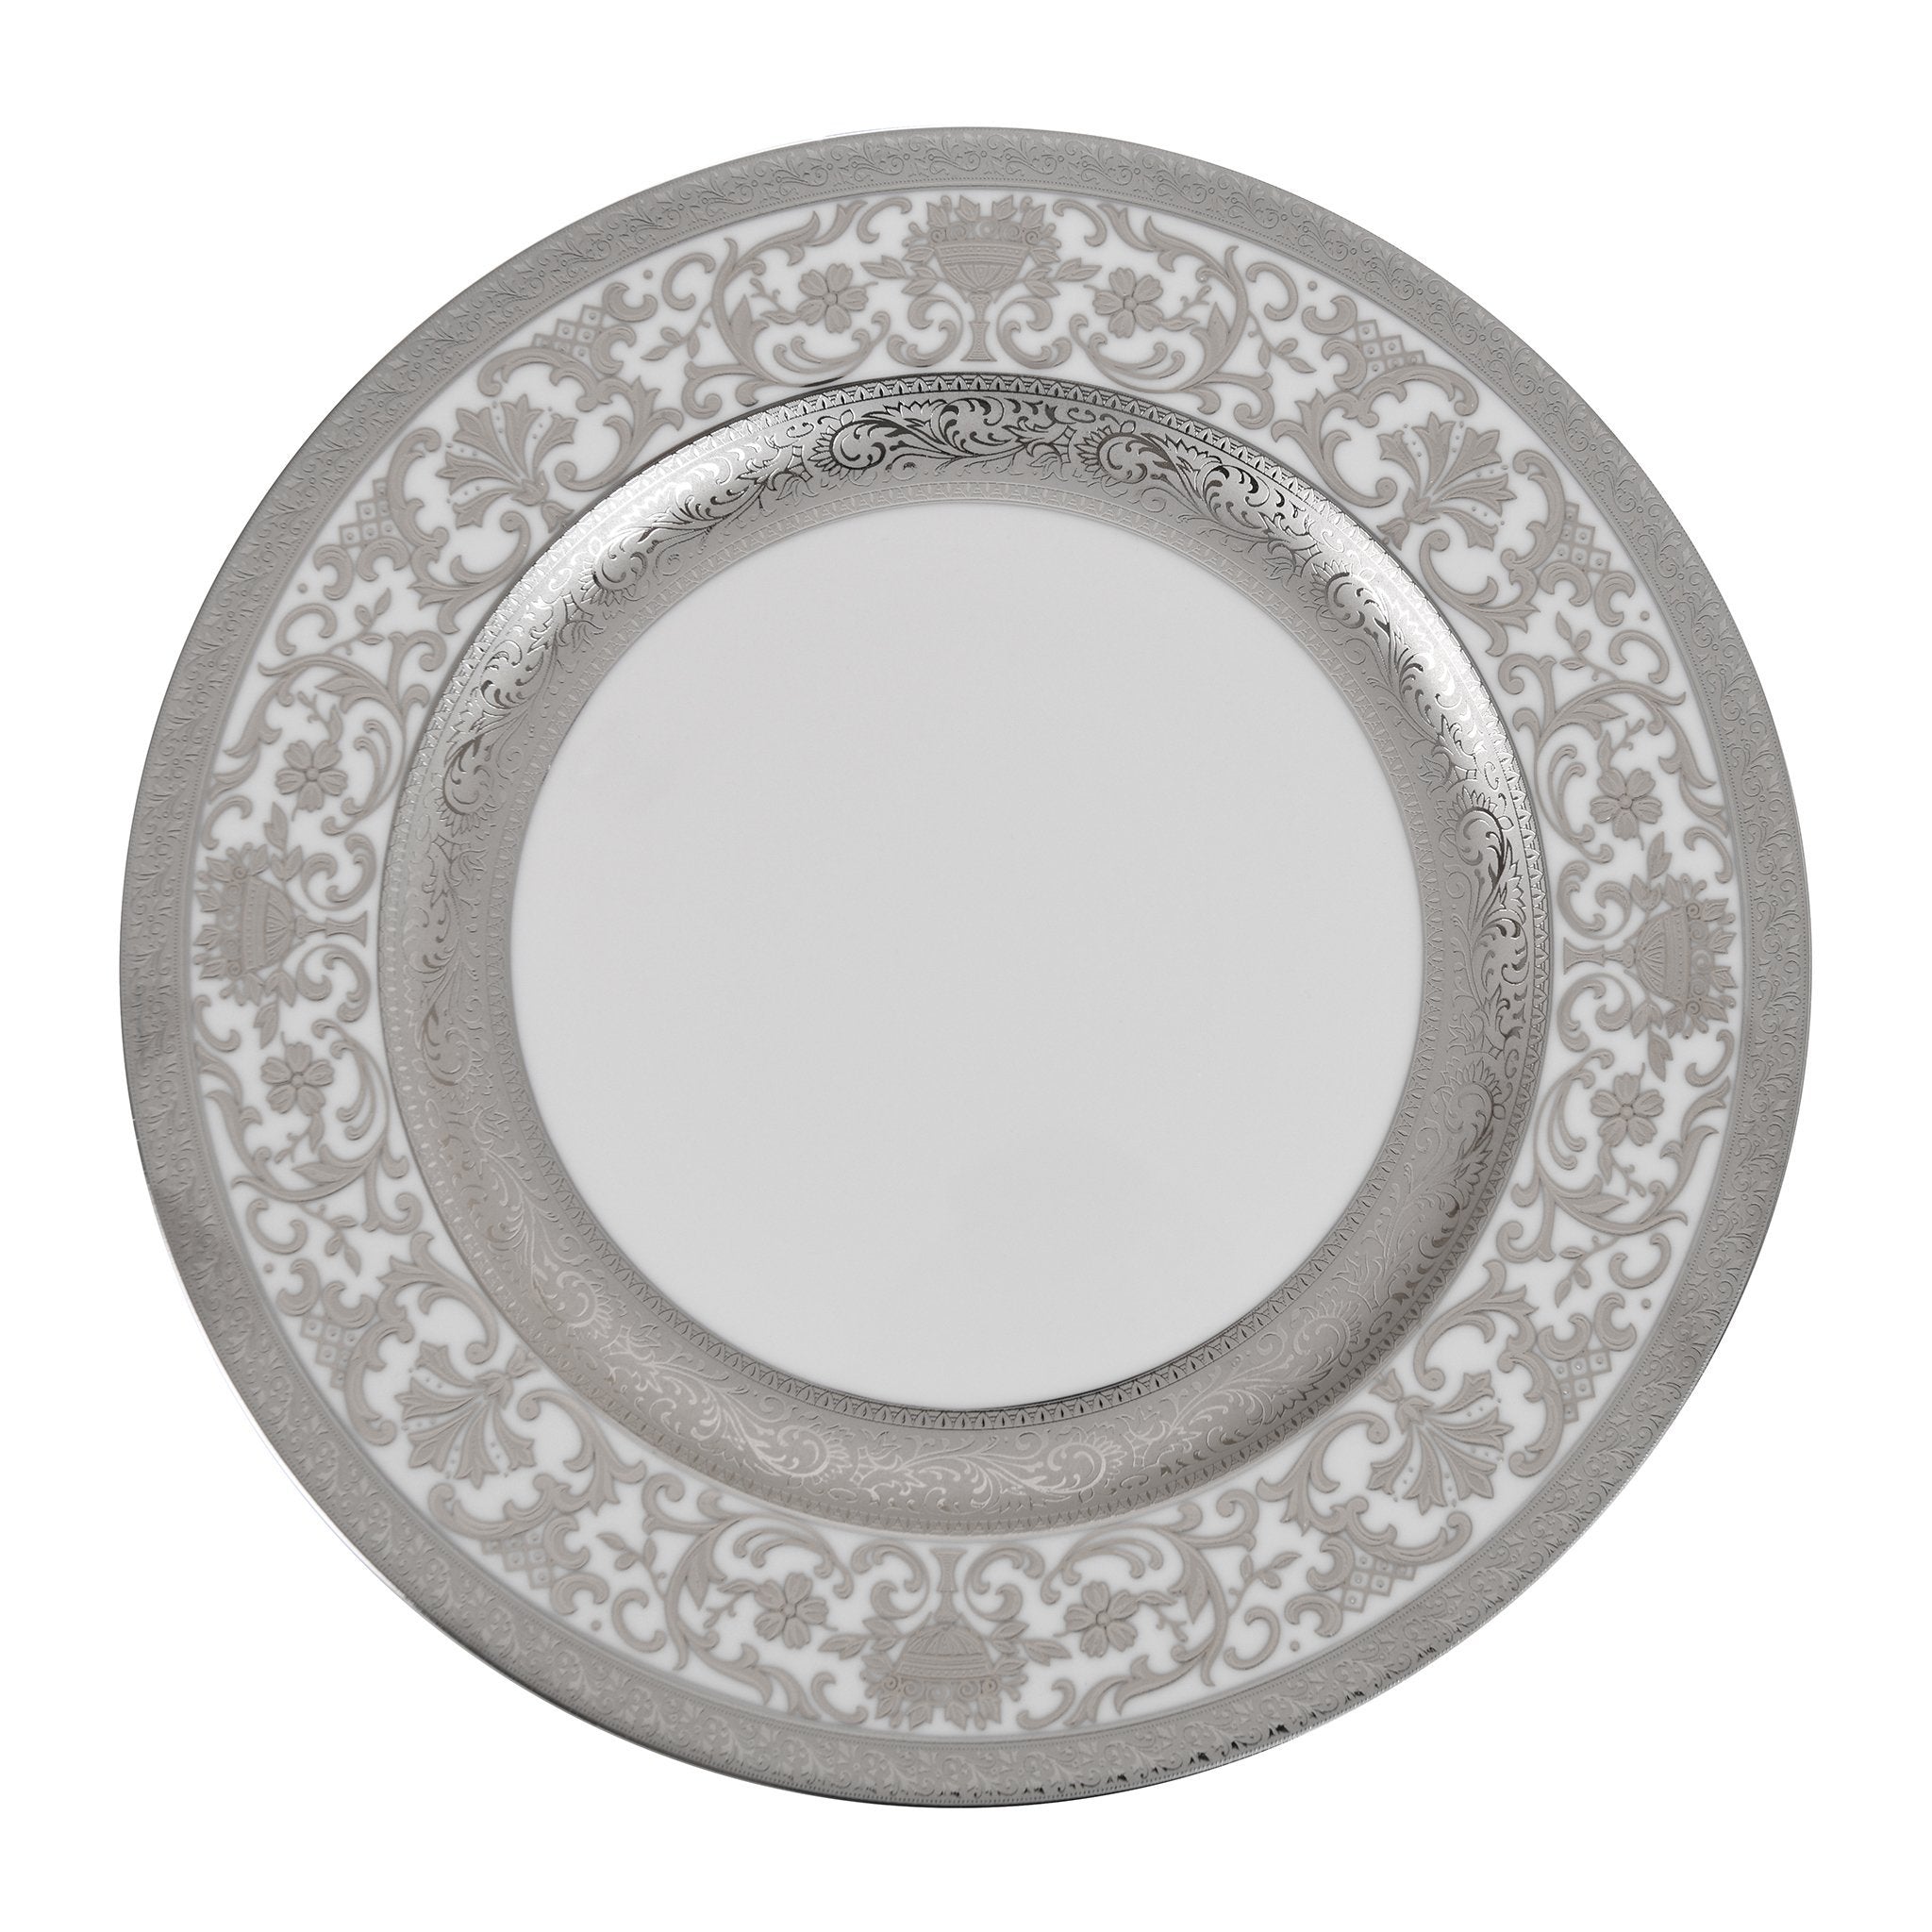 Falkenporzellan - Dinner Set 112 Pieces - Porcelain - Silver - 13000300